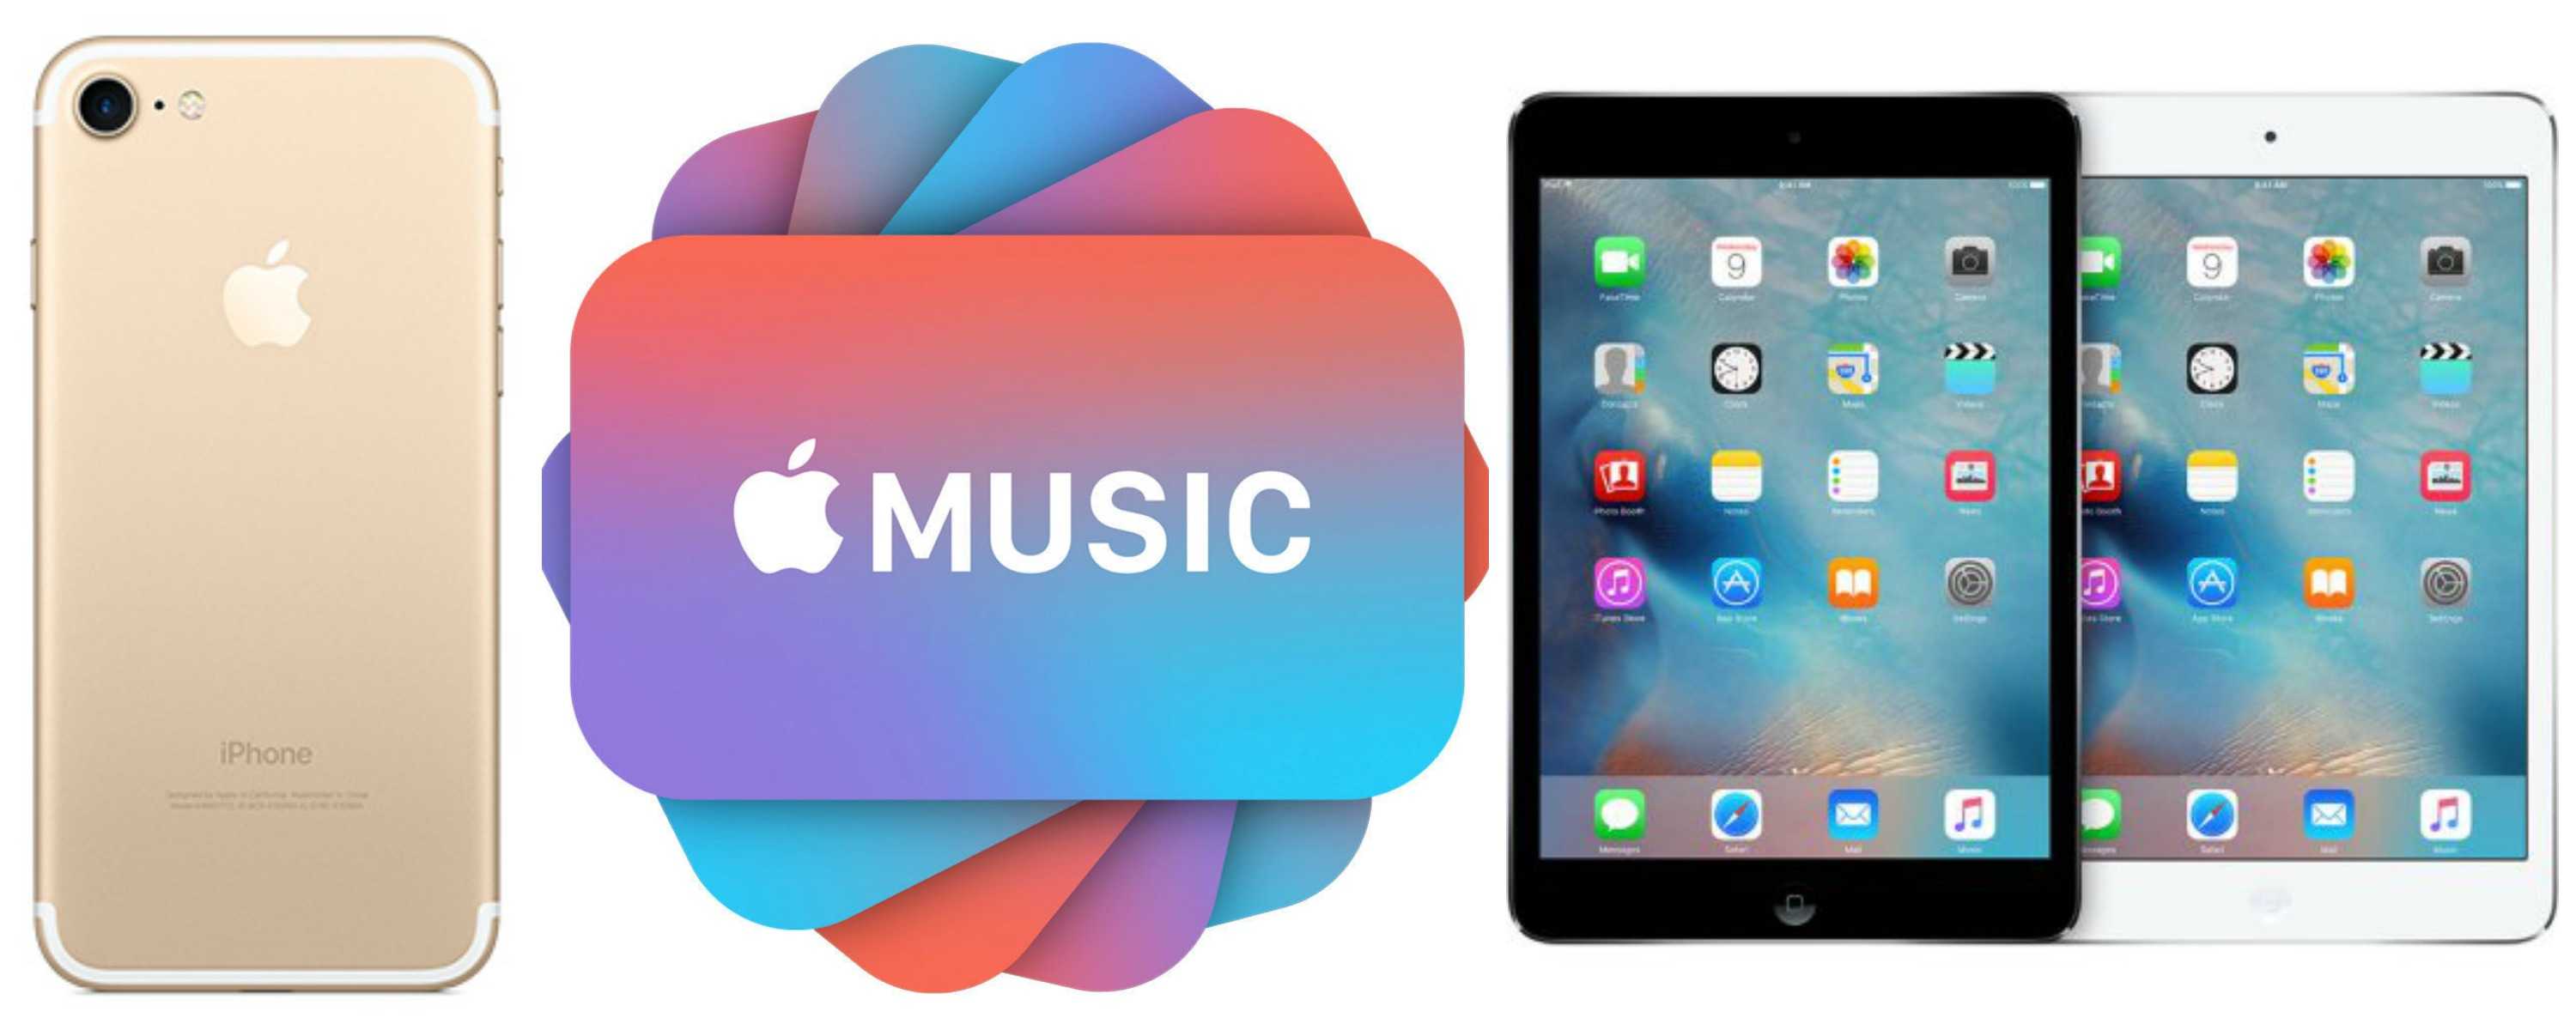 Apple deals: iPhone 7, Apple Music, iPhone 6s, iPad mini 2